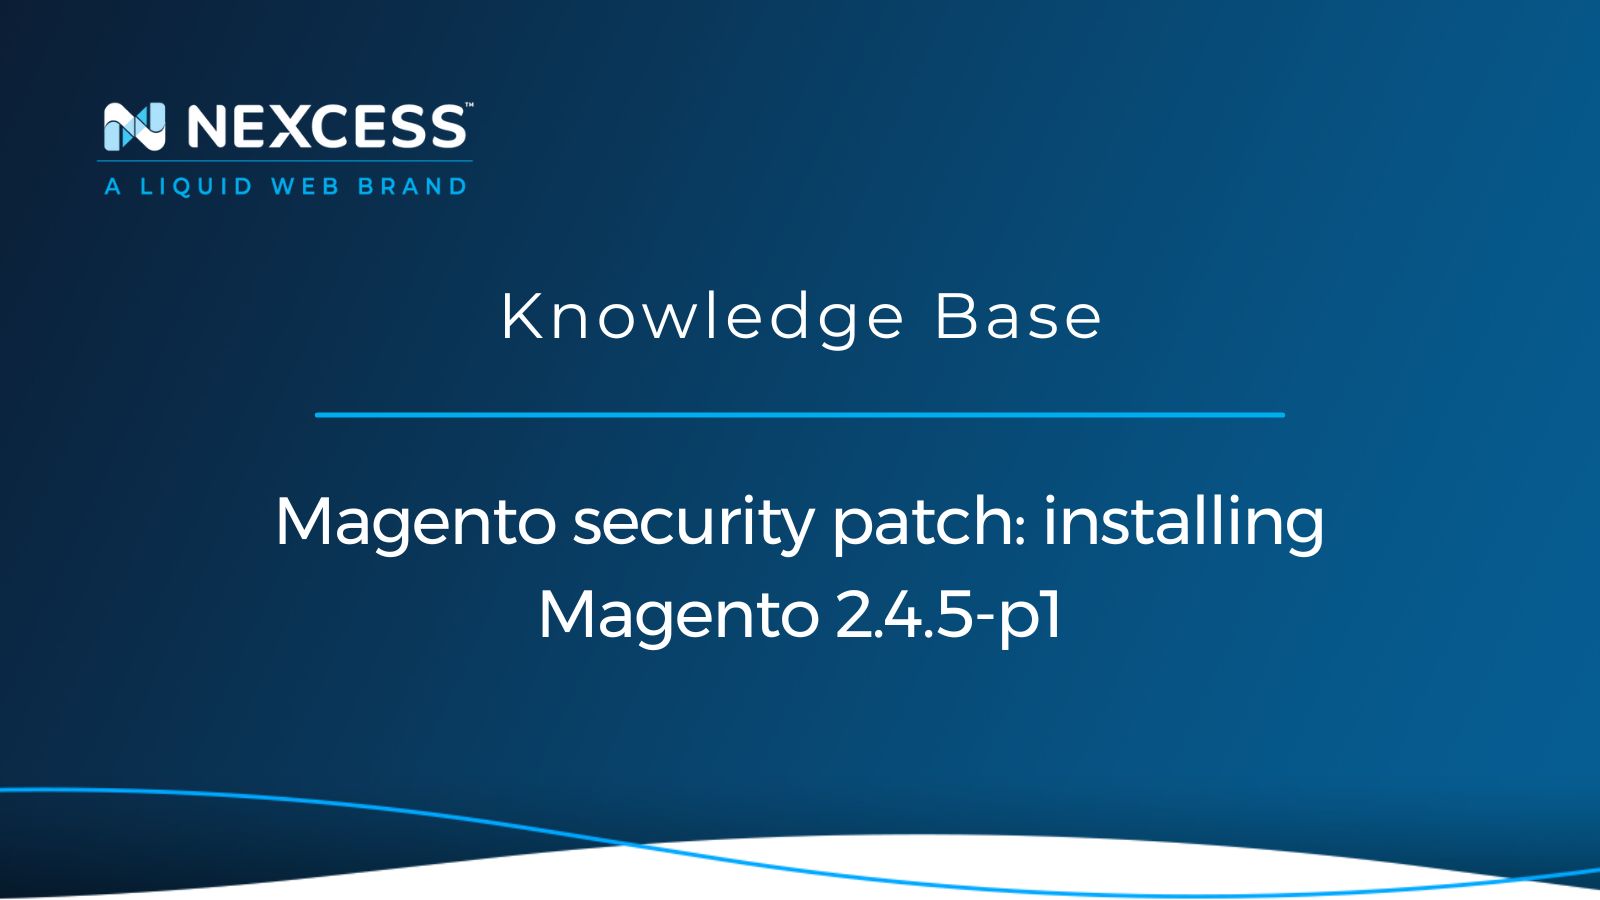 Magento security patch: installing Magento 2.4.5-p1